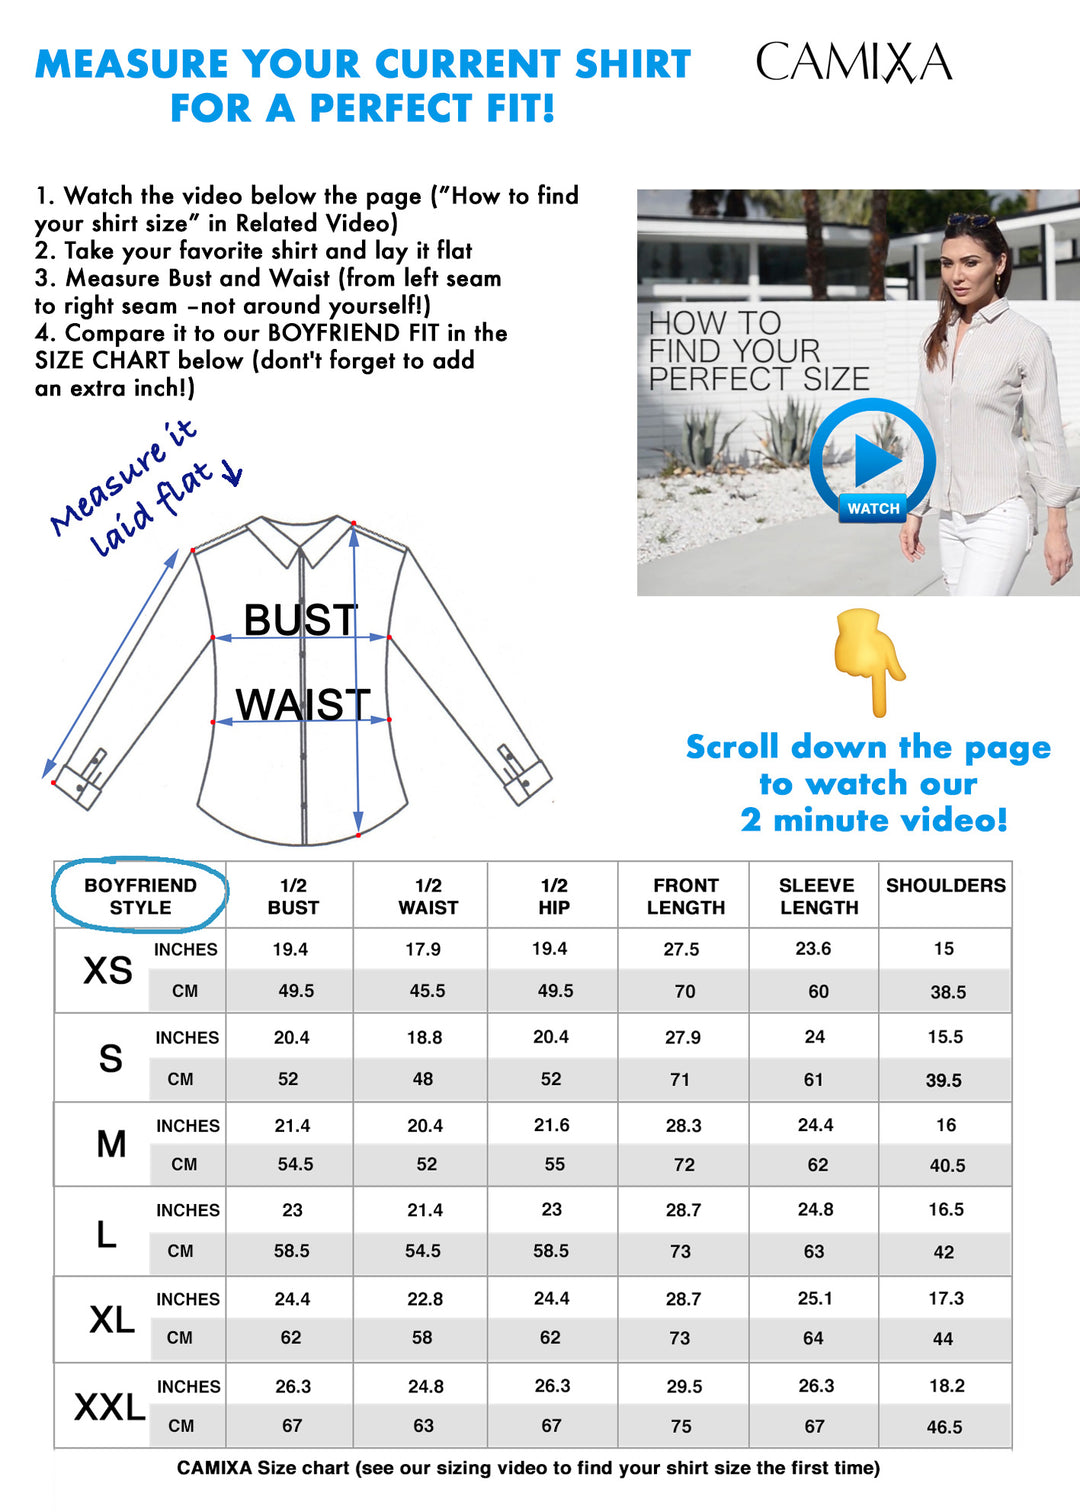 Febe-SS White Casual Linen Camp Shirt